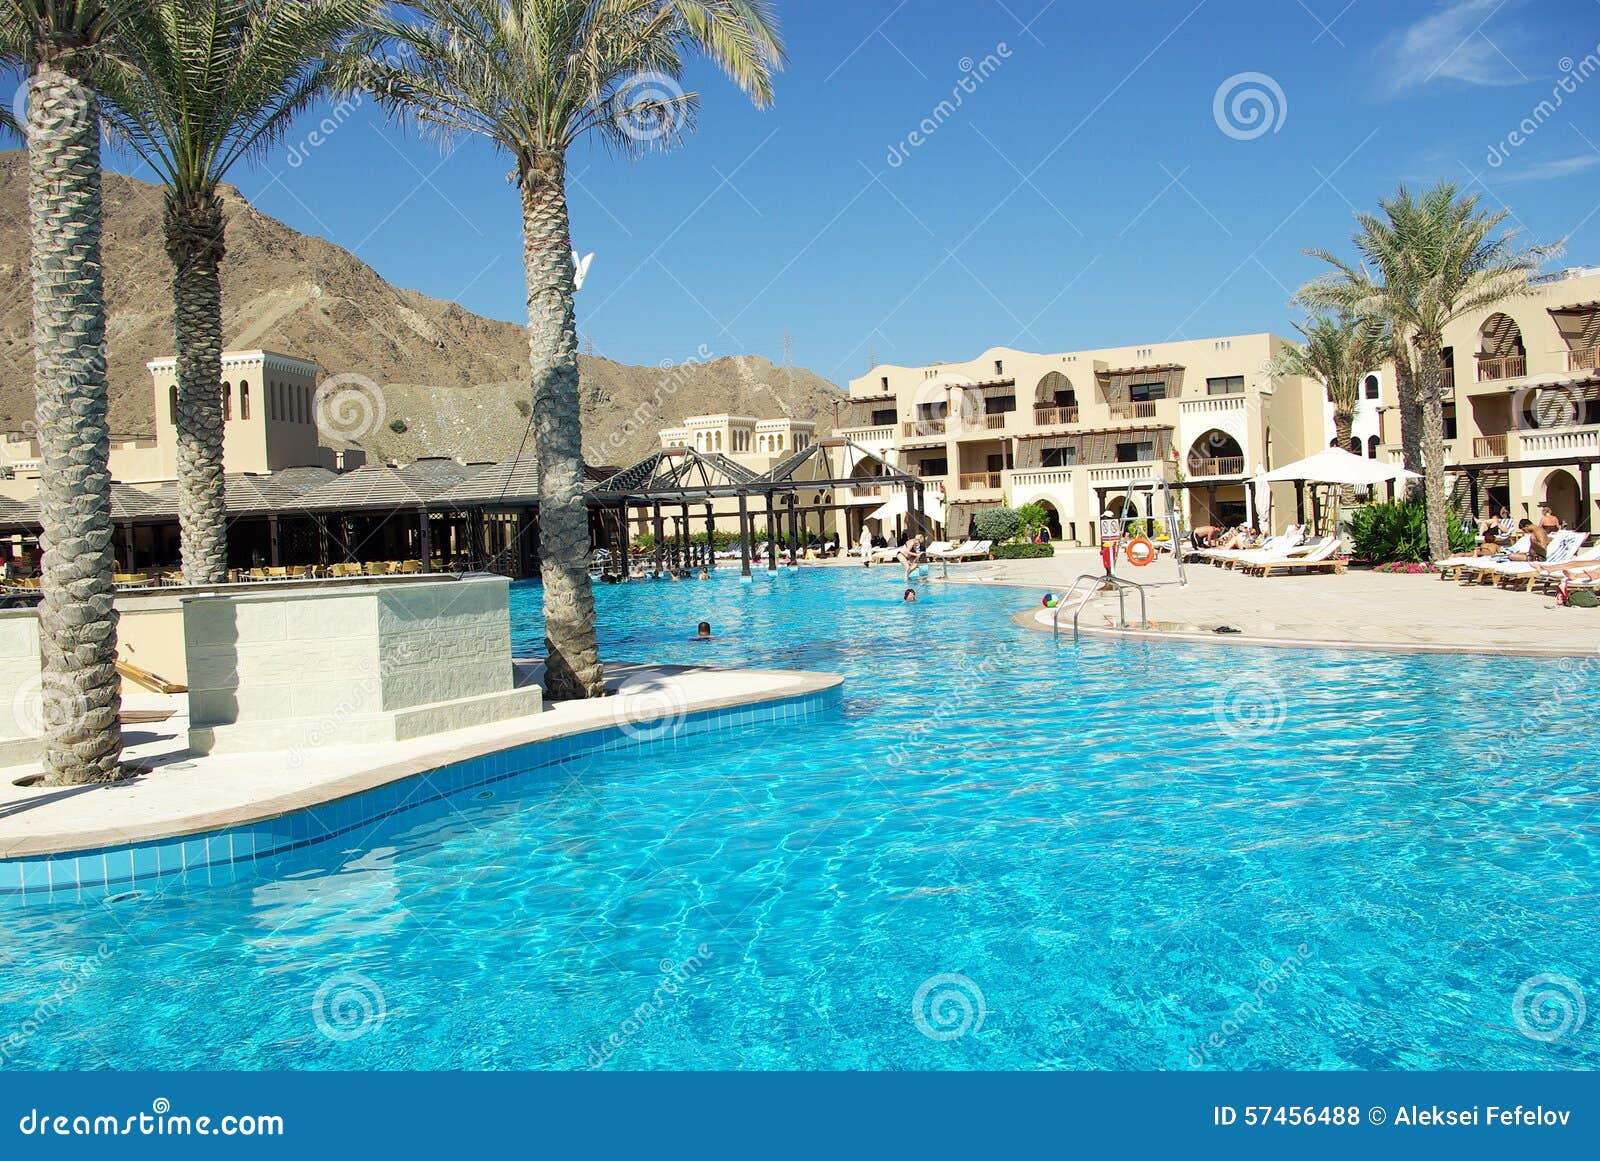 types of fujairah resorts.